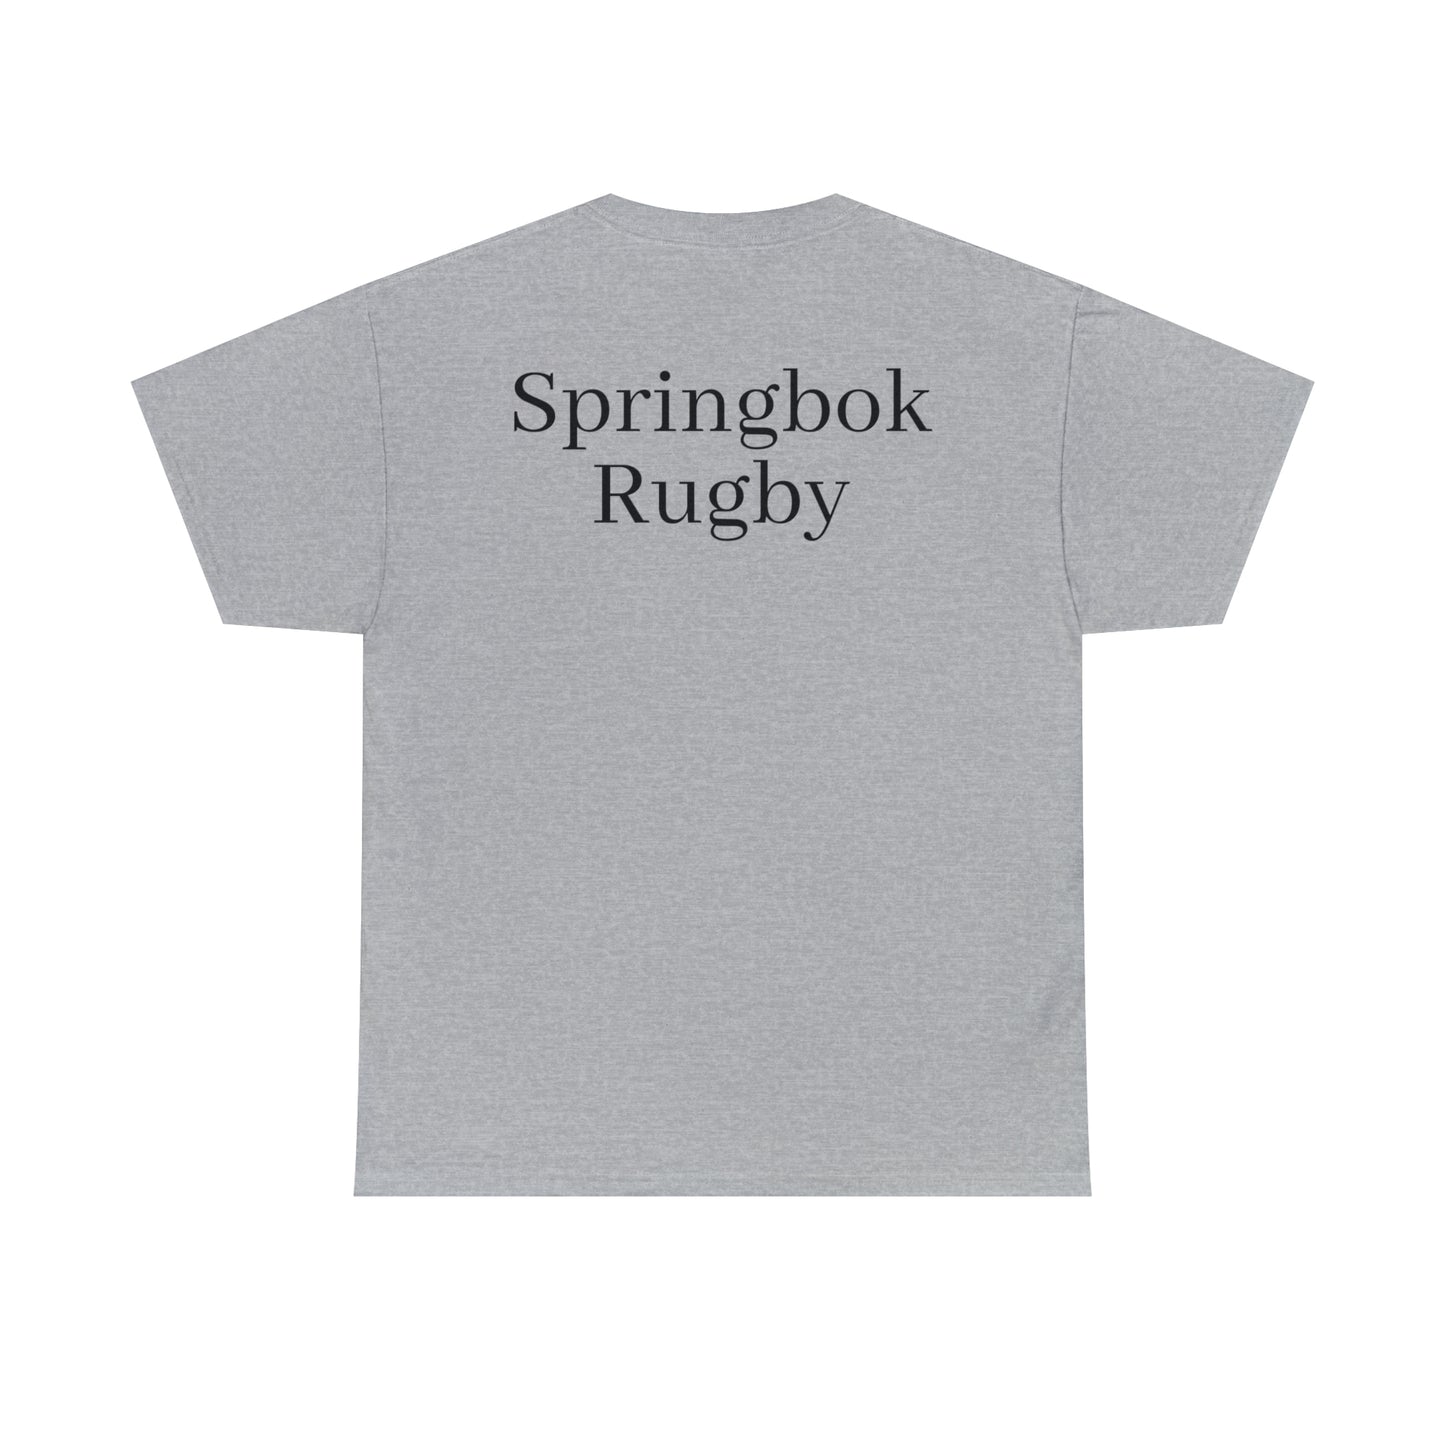 Springboks lifting RWC - light shirts